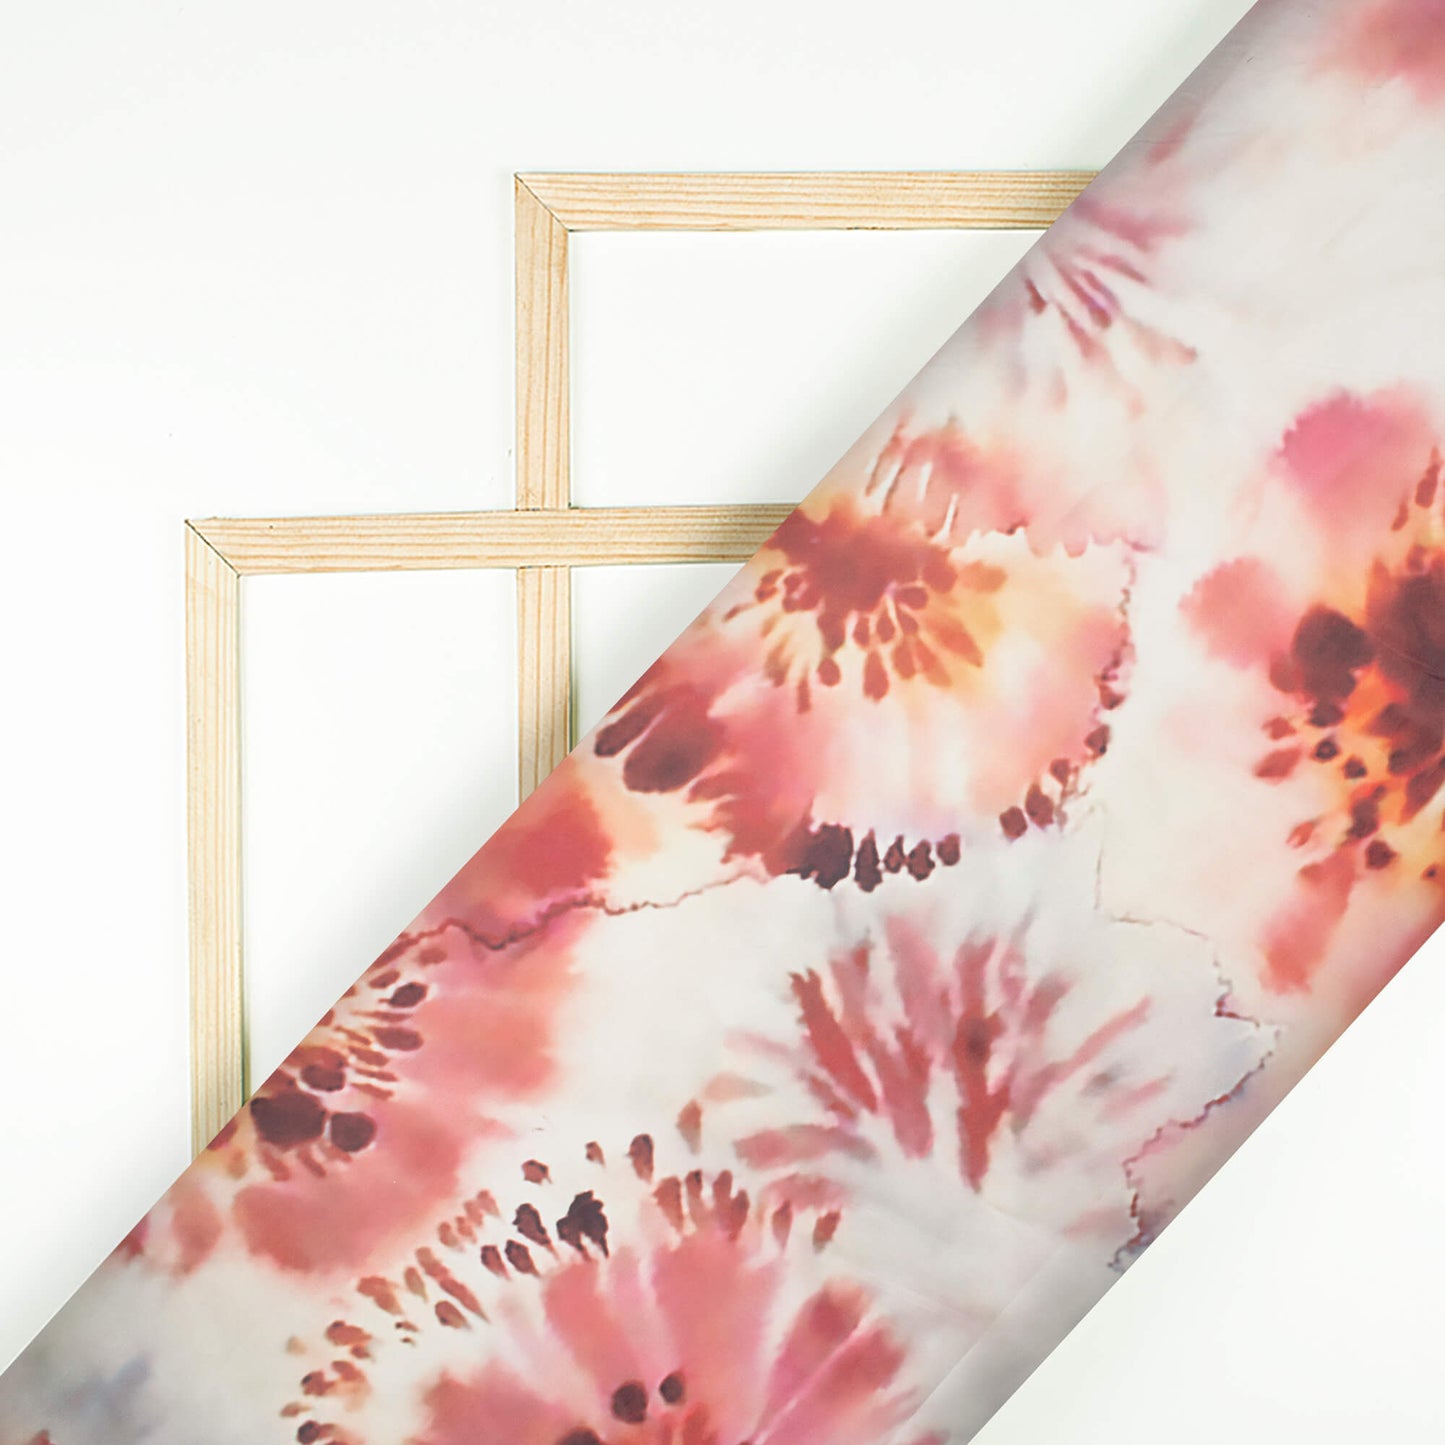 White And Brown Shibori Pattern Digital Print Organza Satin Fabric